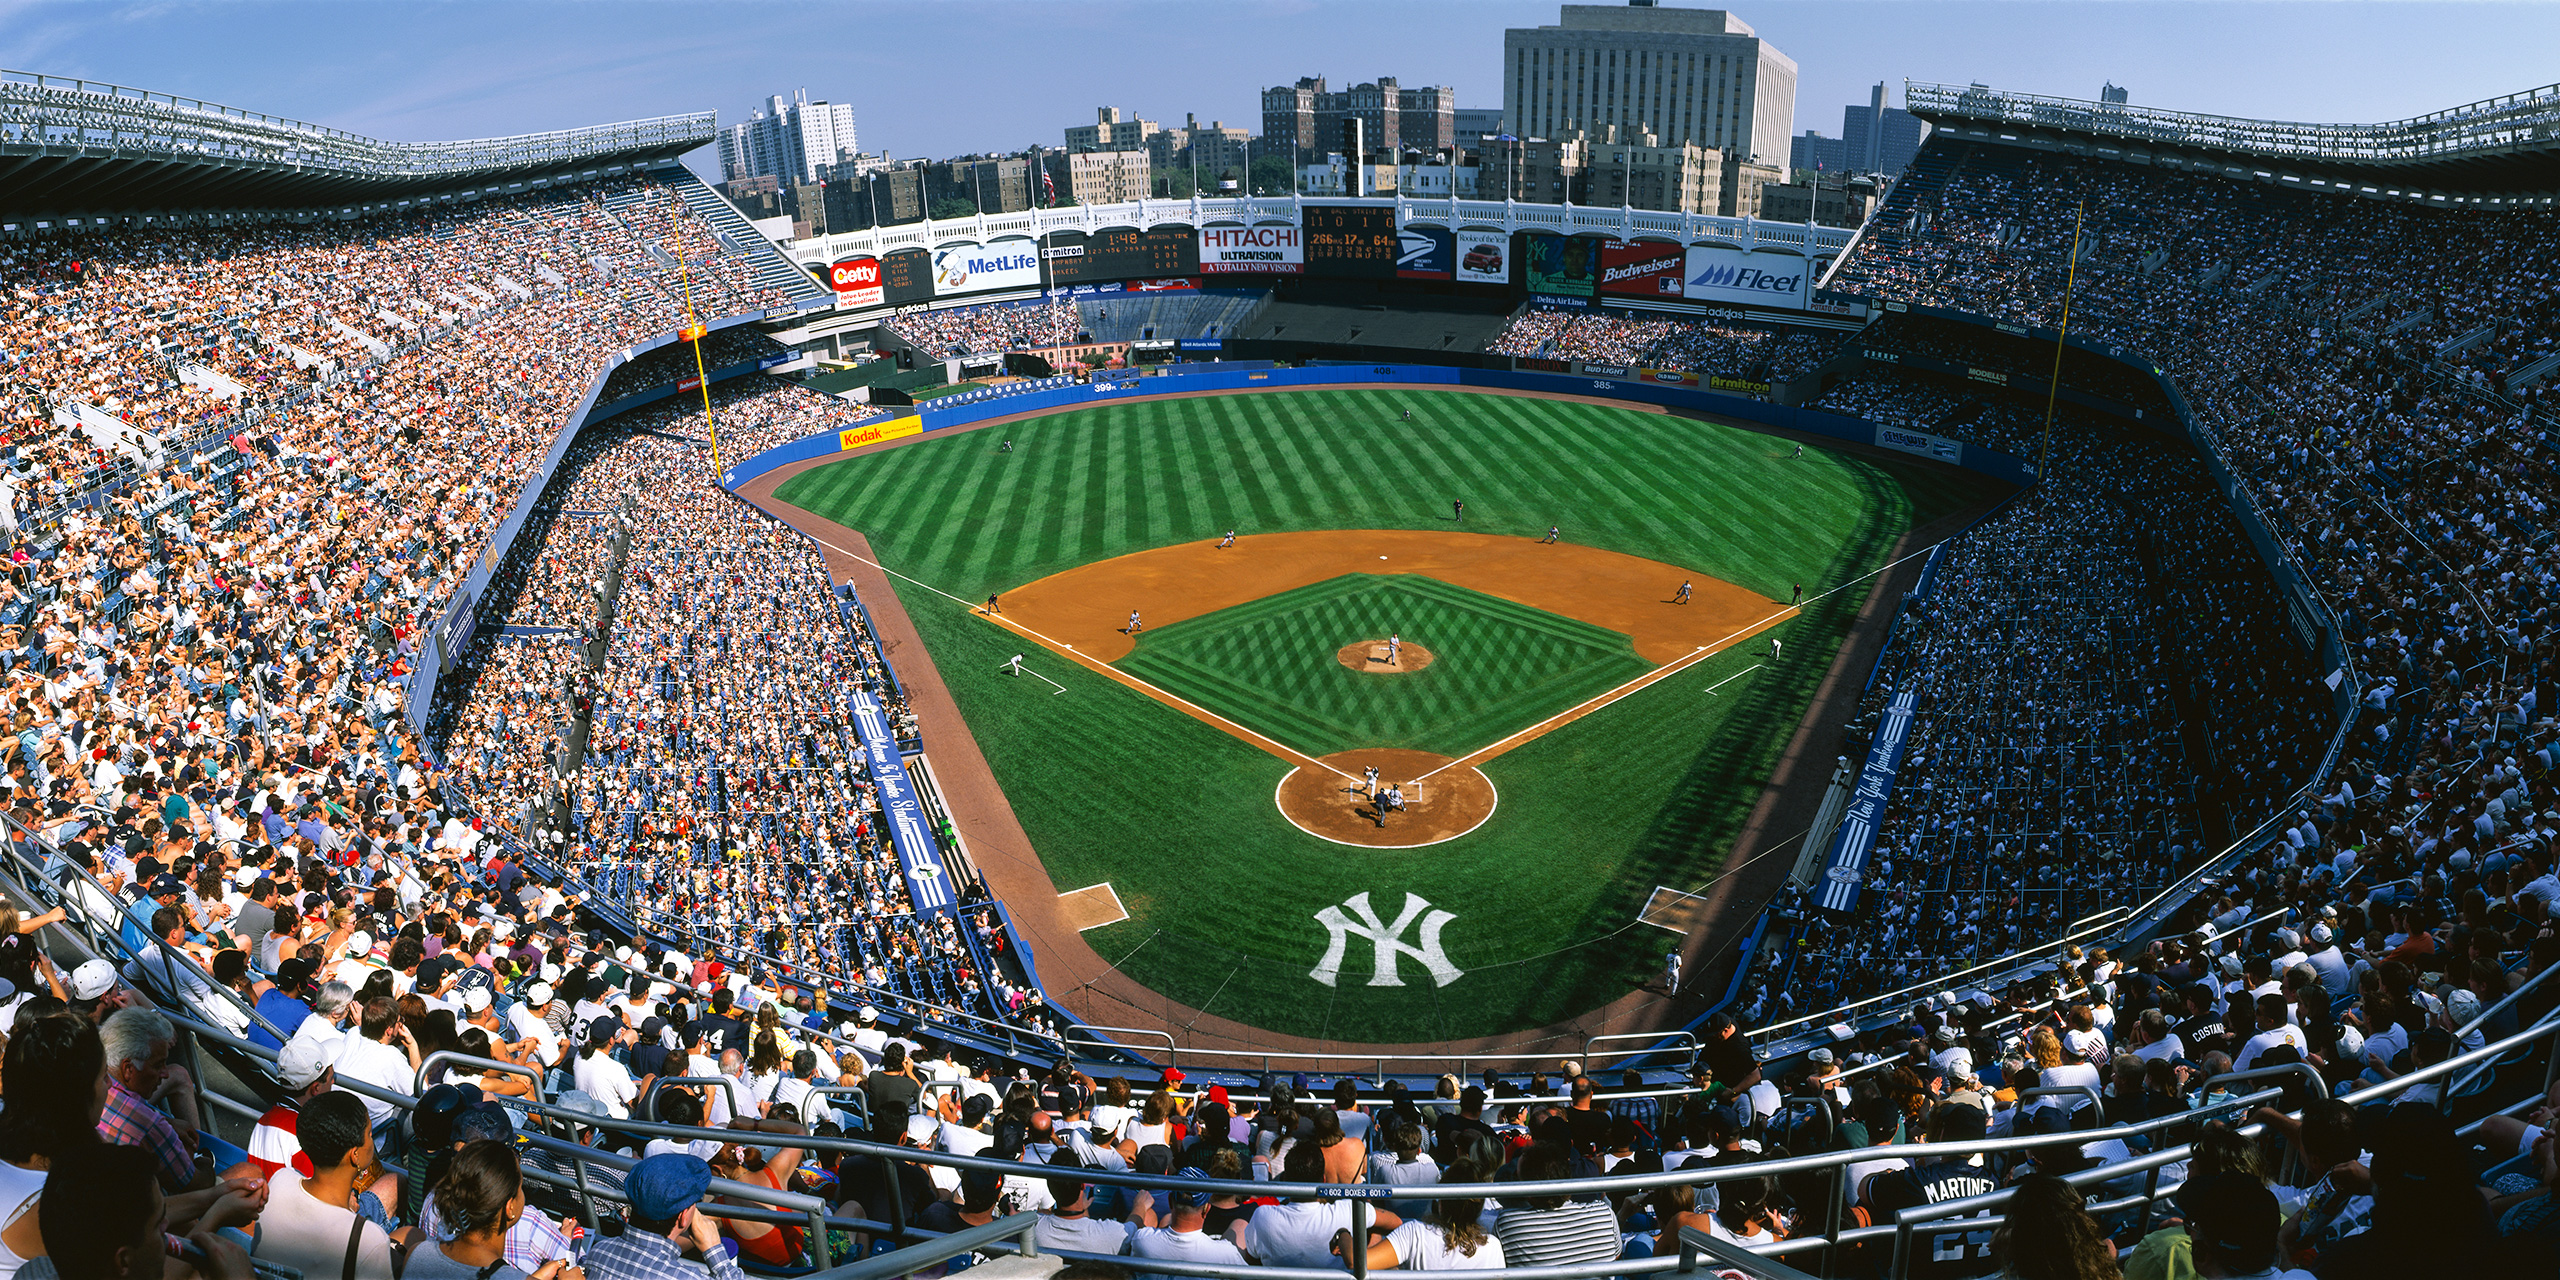 10 Best MLB Baseball Stadiums in the US